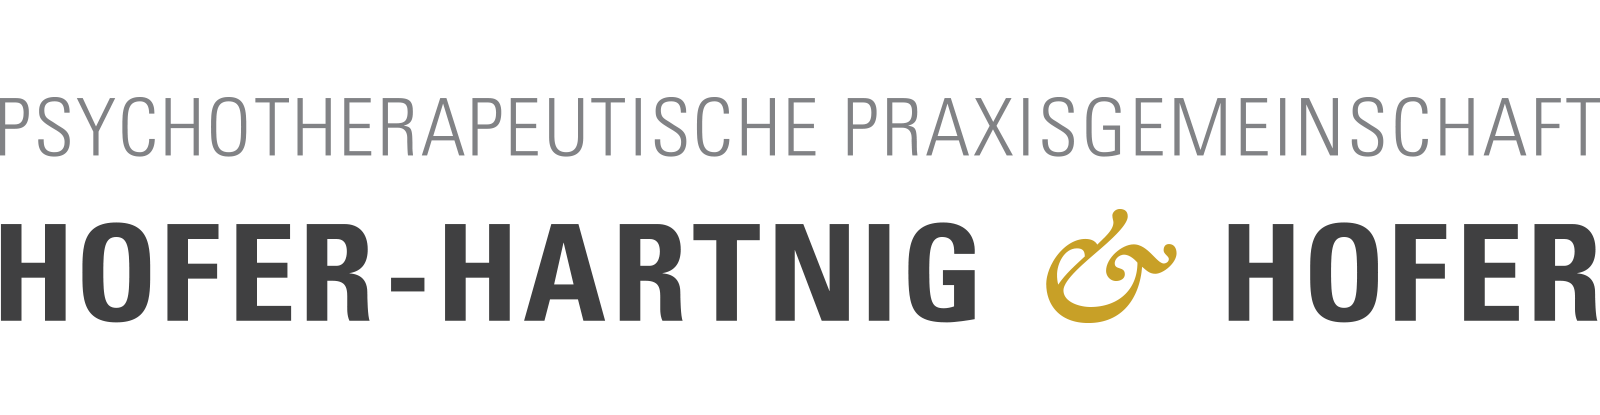 Psychotherapeutische Praxisgemeinsschaft Hofer-Hartnig & Hofer – Logo